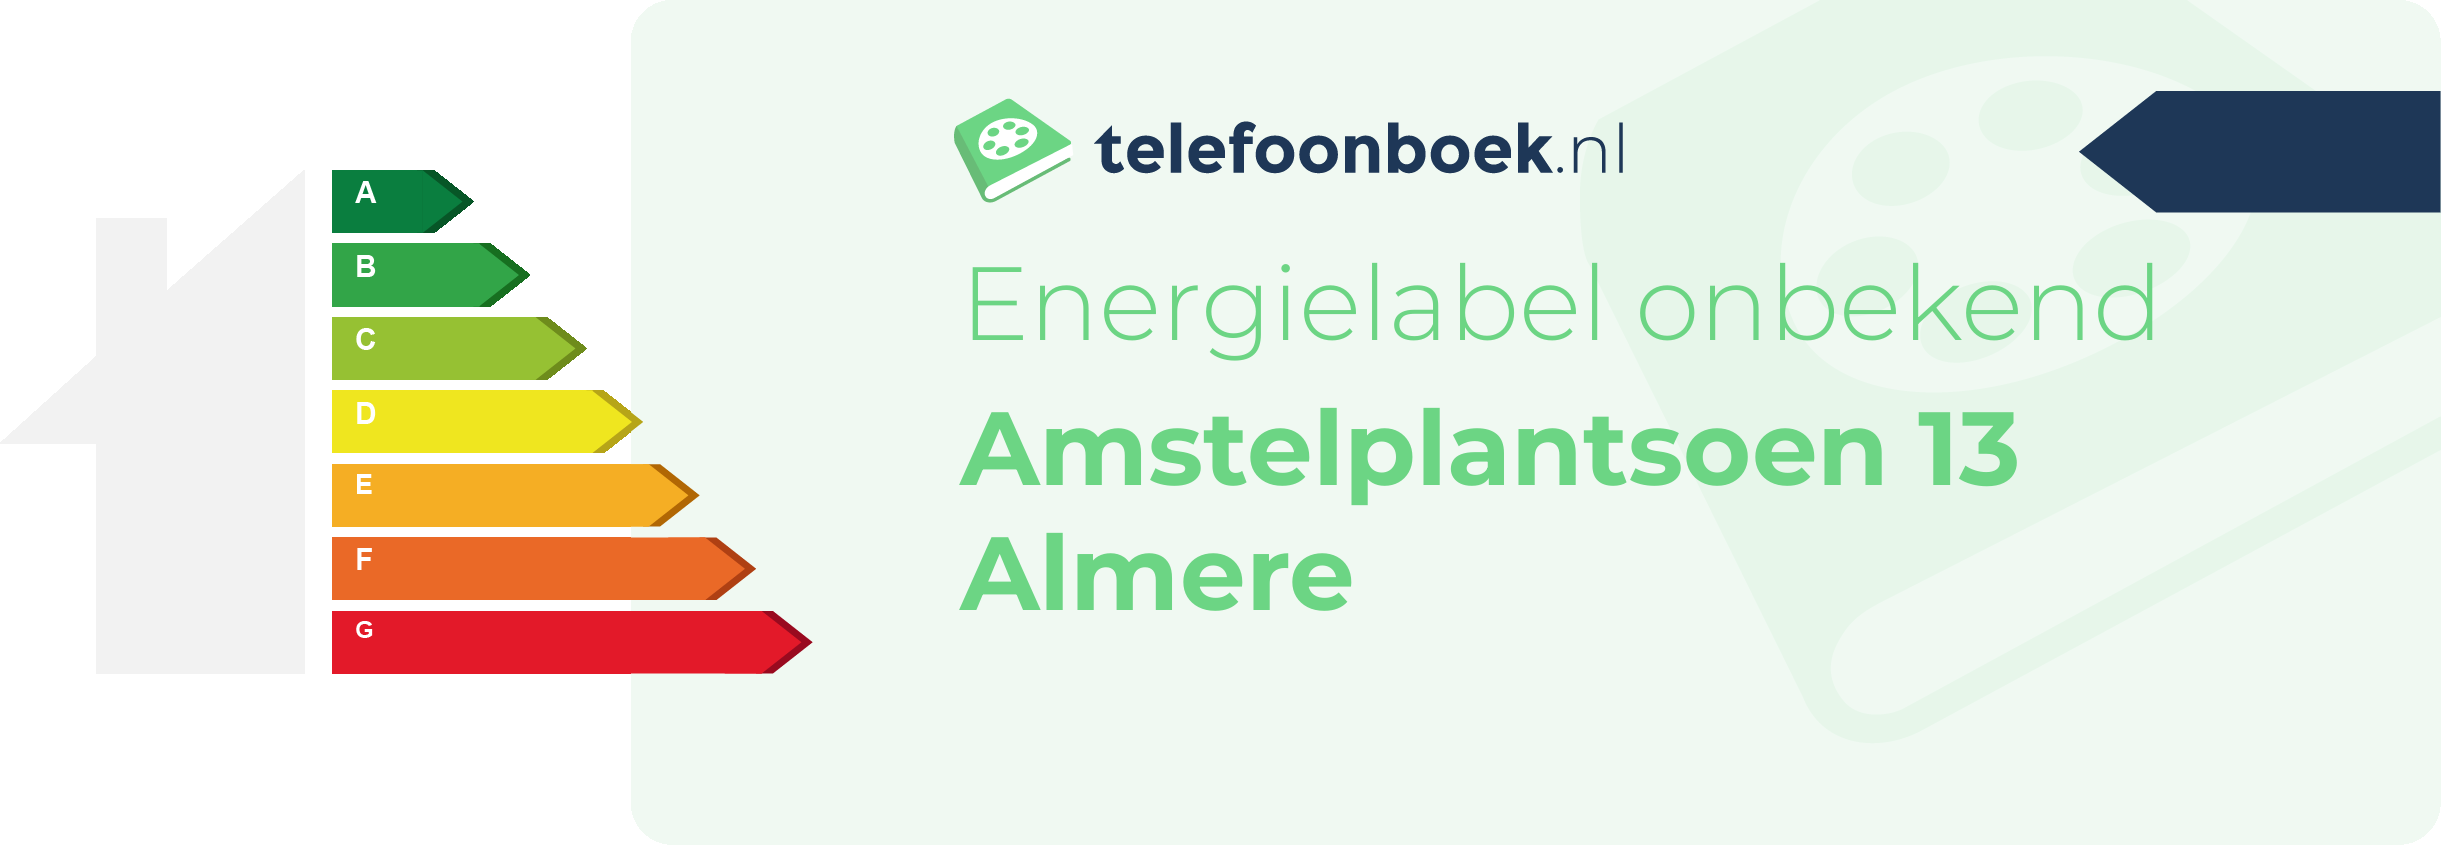 Energielabel Amstelplantsoen 13 Almere